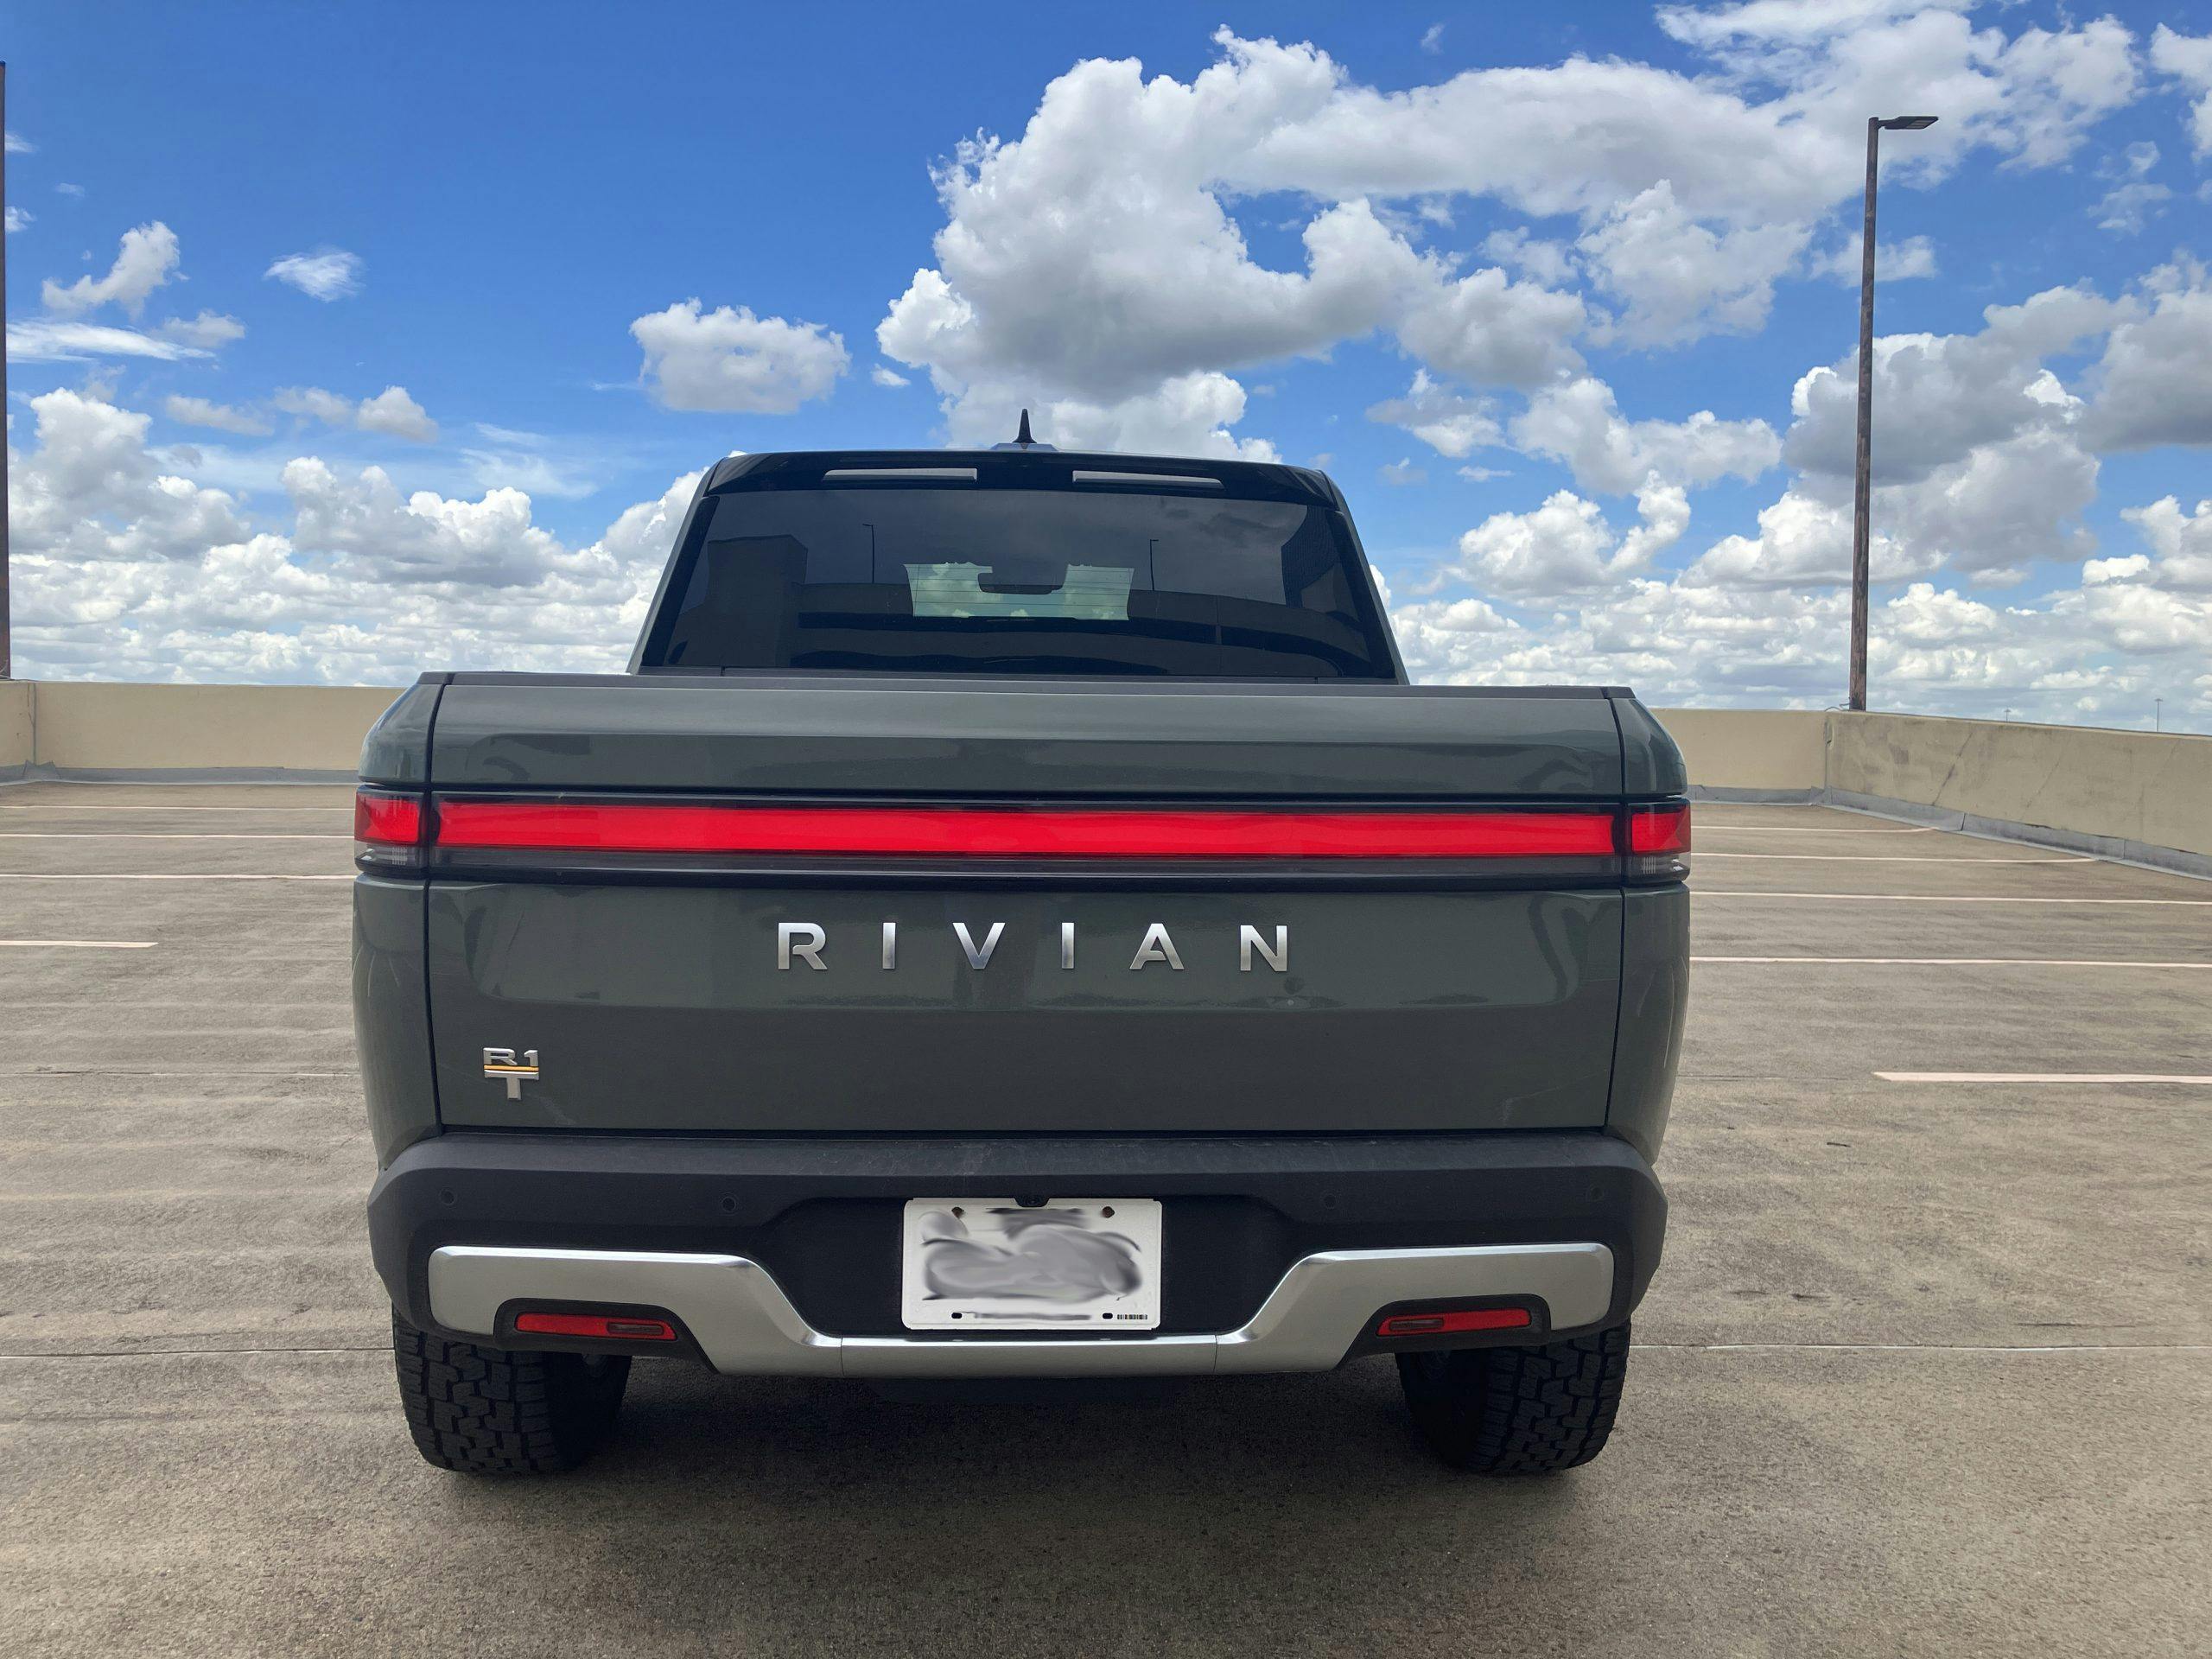 2022 Rivian R1T Launch Edition rear